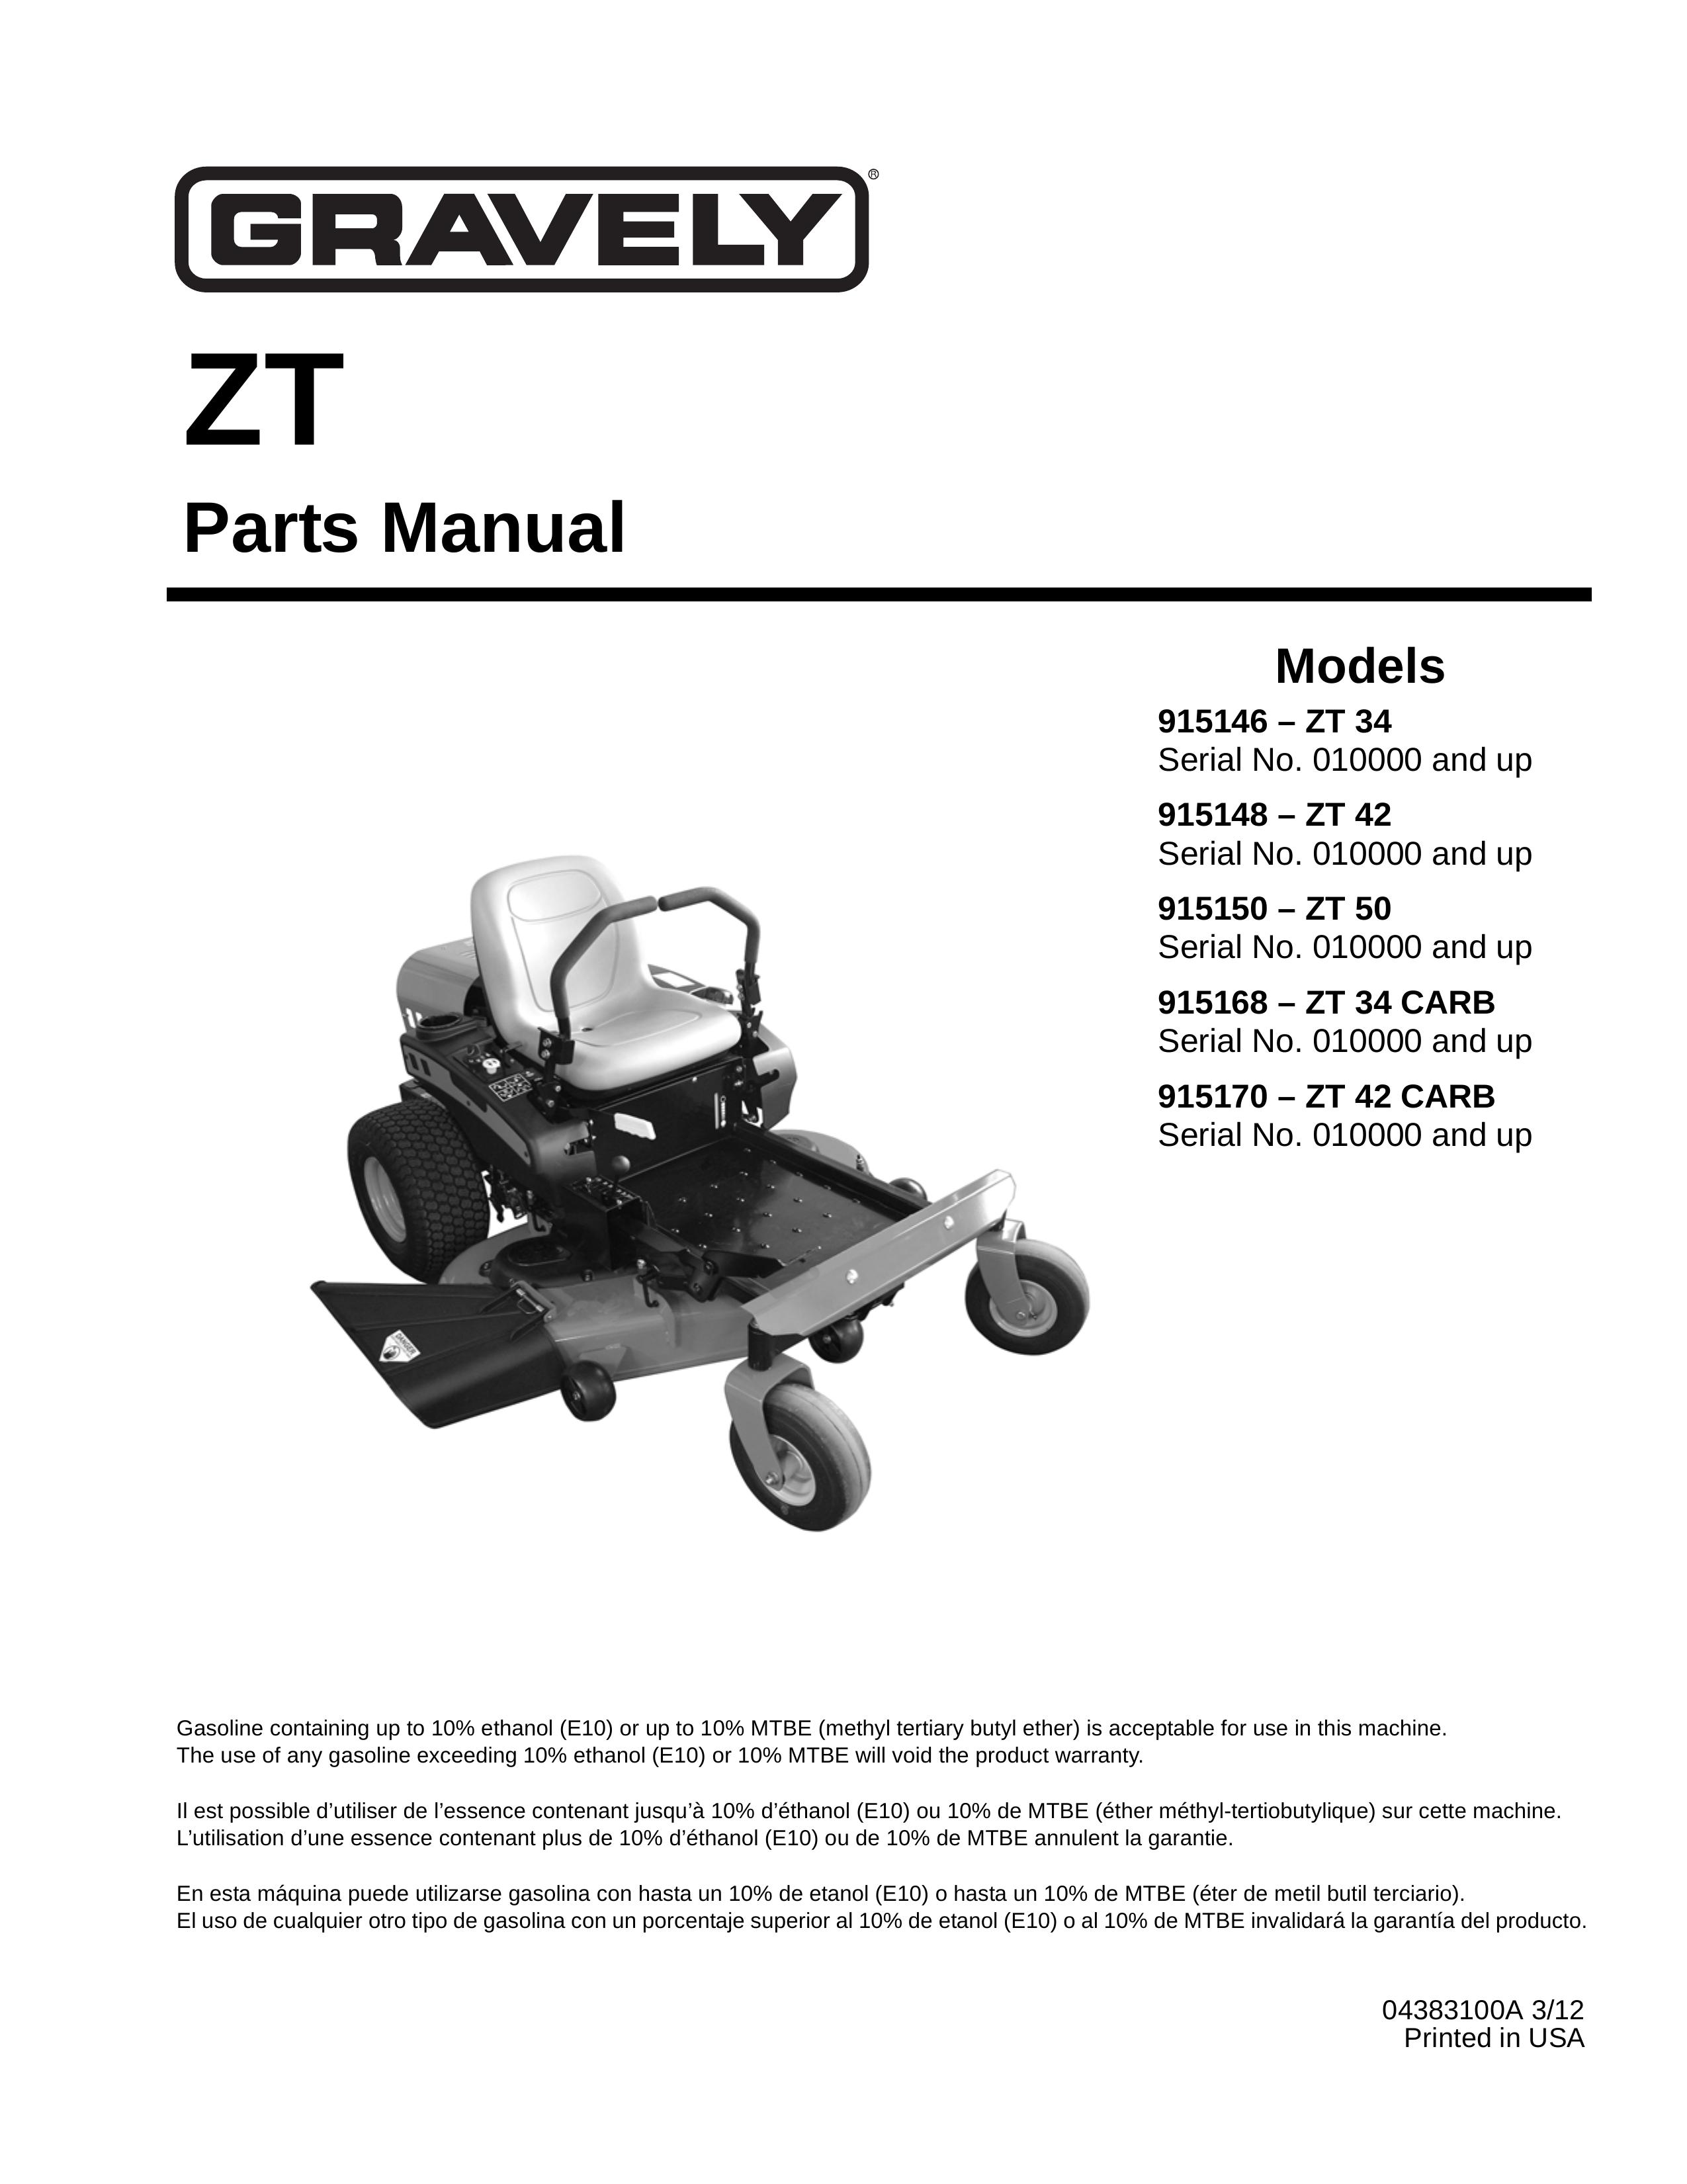 Gravely 915150 ZT-50 Lawn Mower User Manual